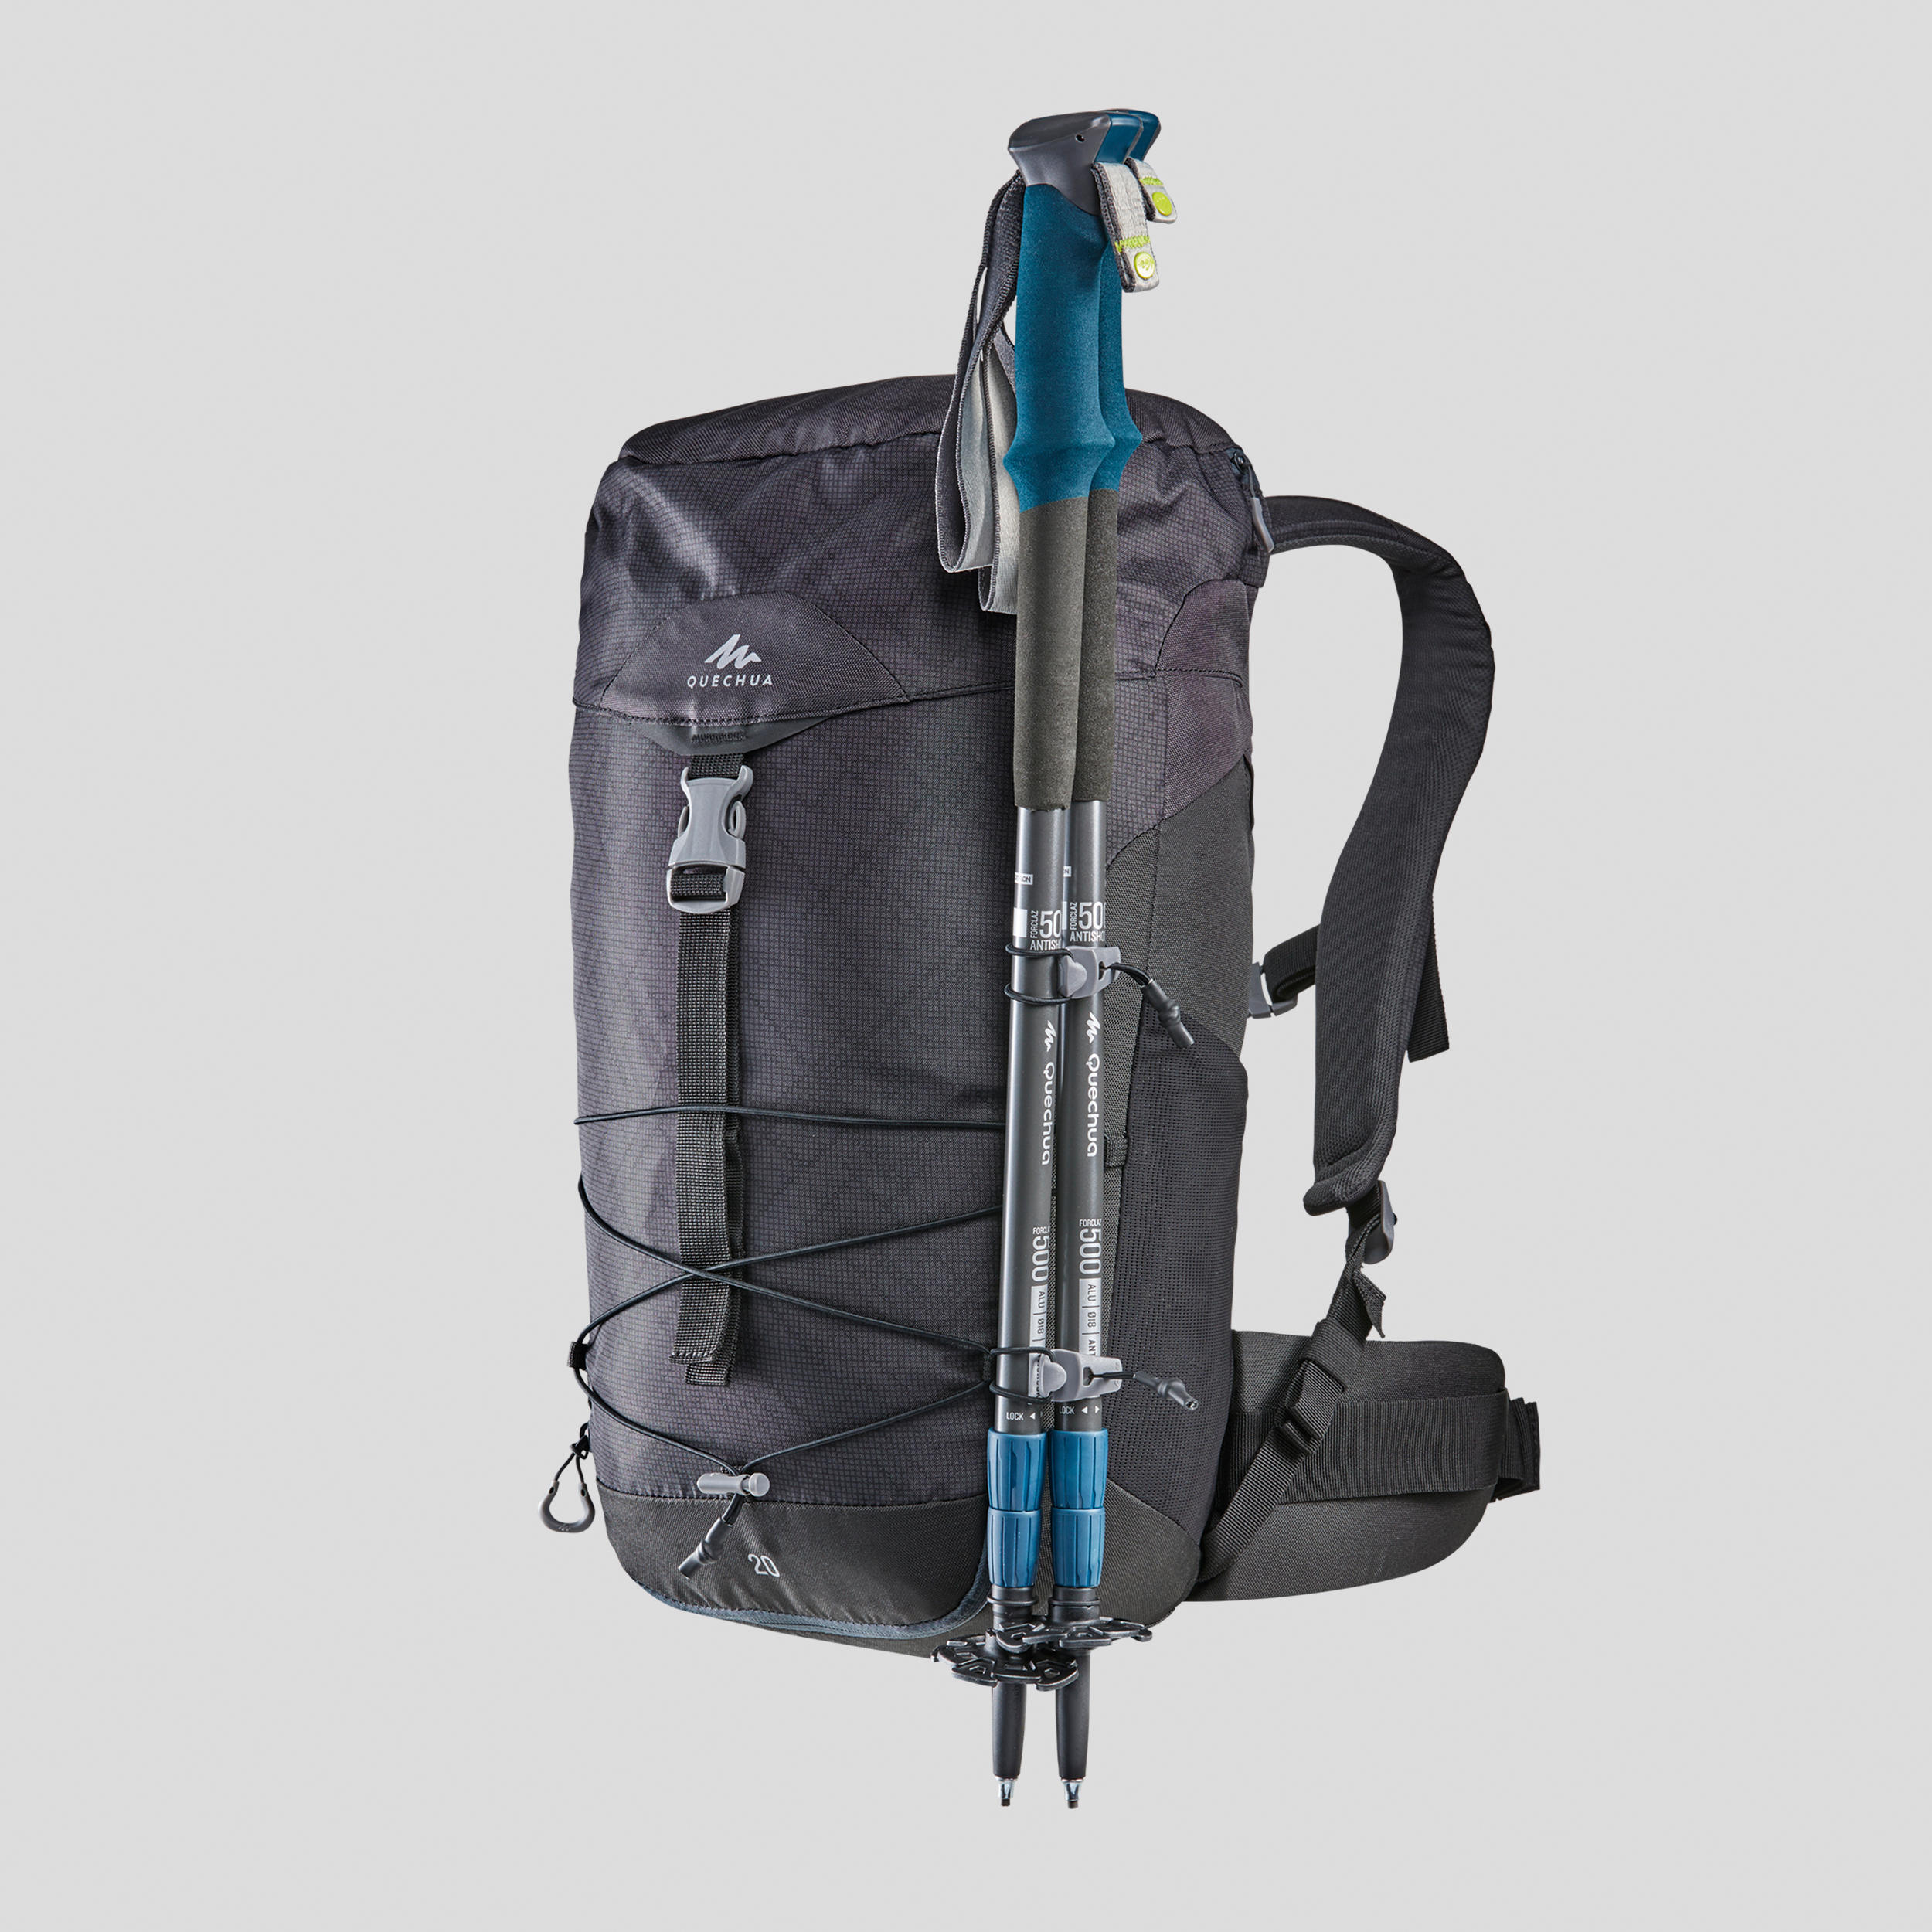 20 L Hiking Backpack - MH 100 Black - QUECHUA